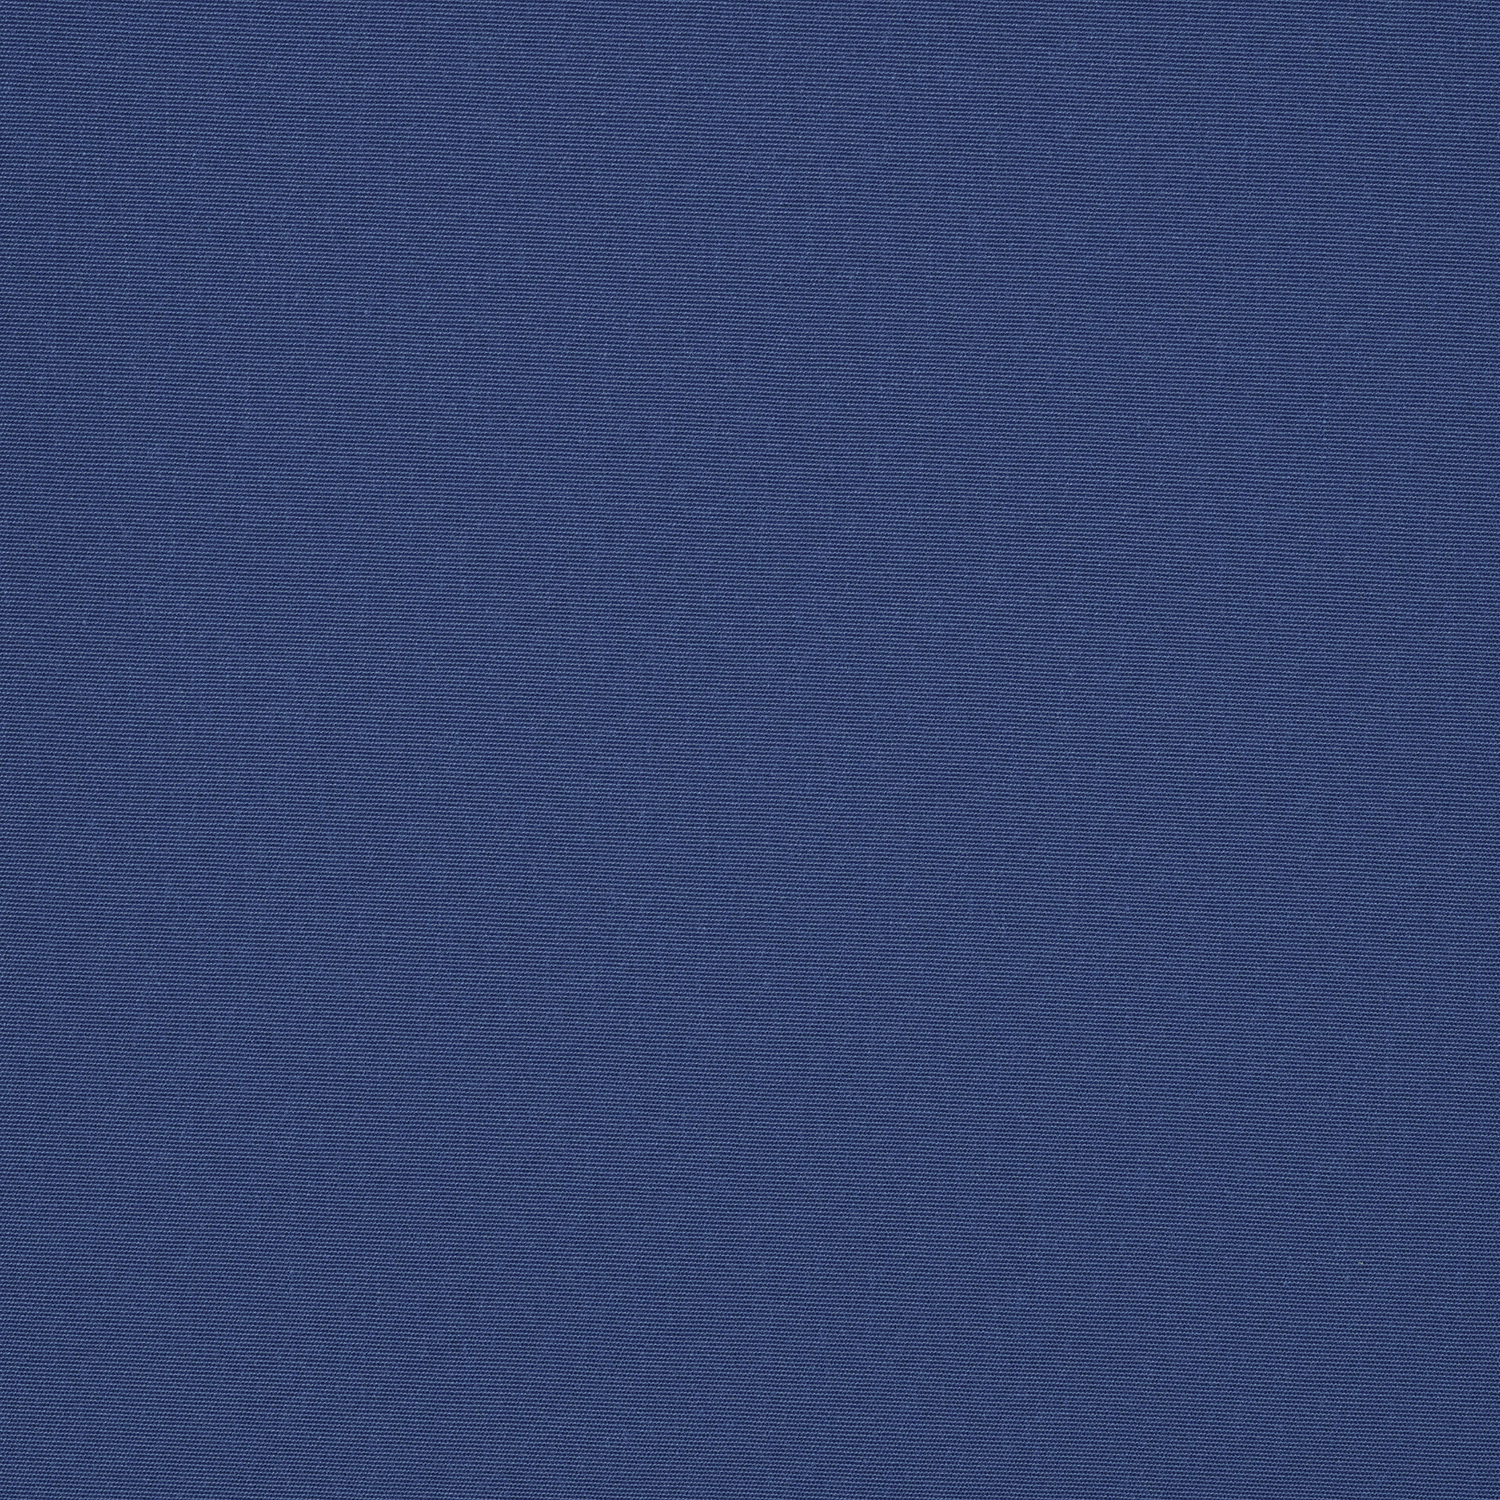 Sunbrella Mediterranean Blue #4652-0000 Awning Marine Fabric 